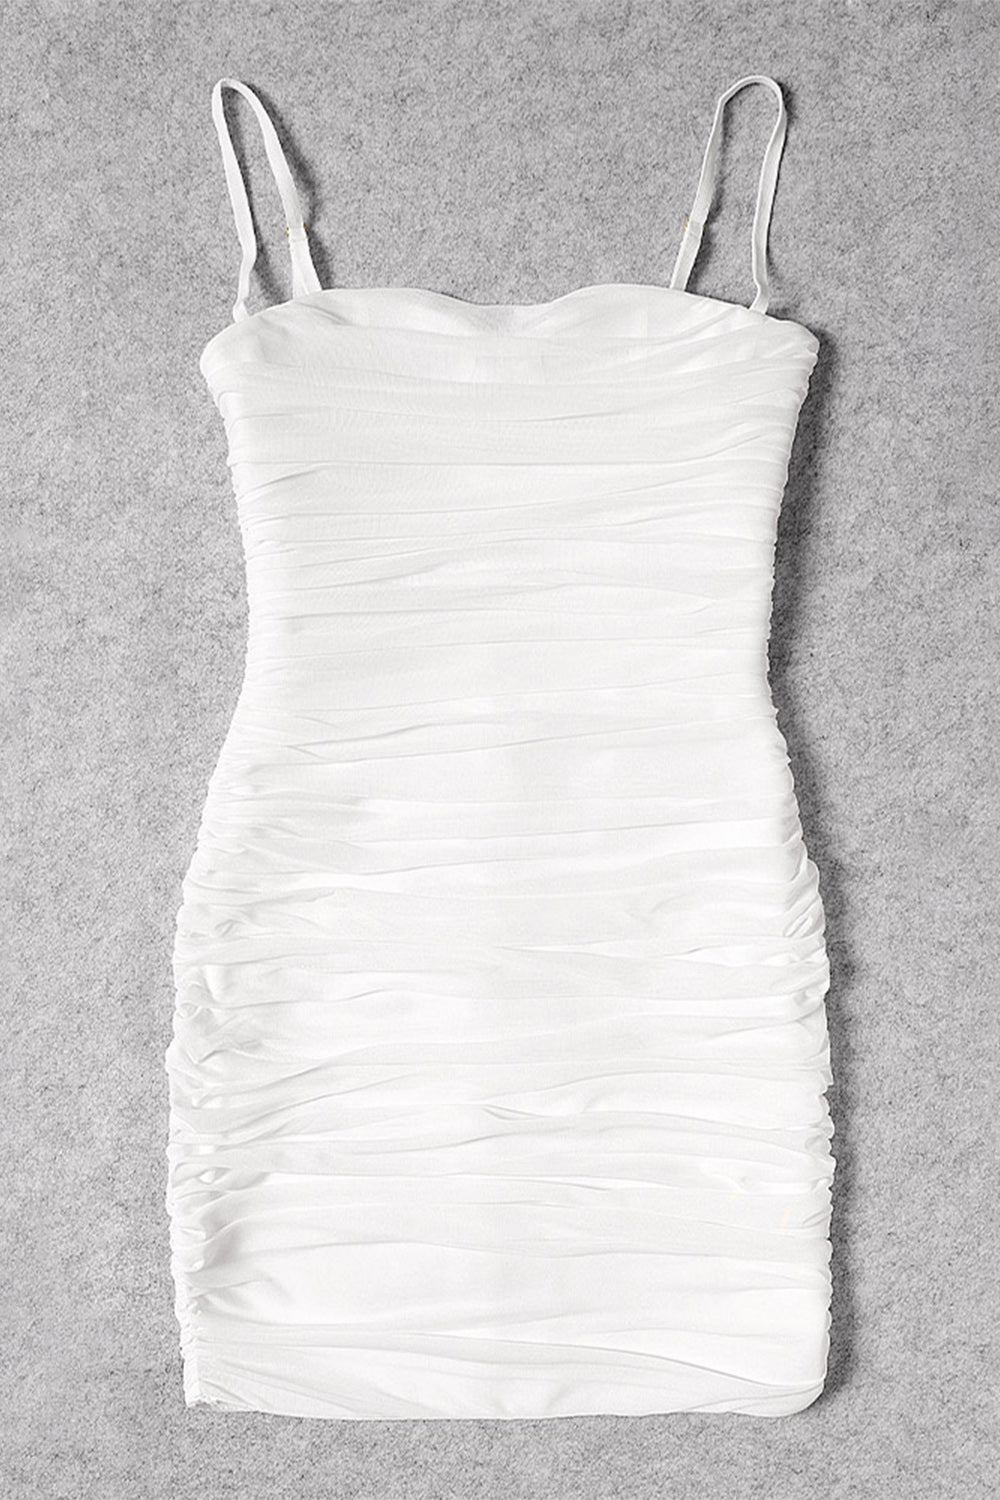 white bandage dress, white bodycon dress, white cocktail dress, bandage dress for women, mini bandage dress, spaghetti strap bandage dress, event dress, party dress, mesh bandage dress, sexy bandage dress